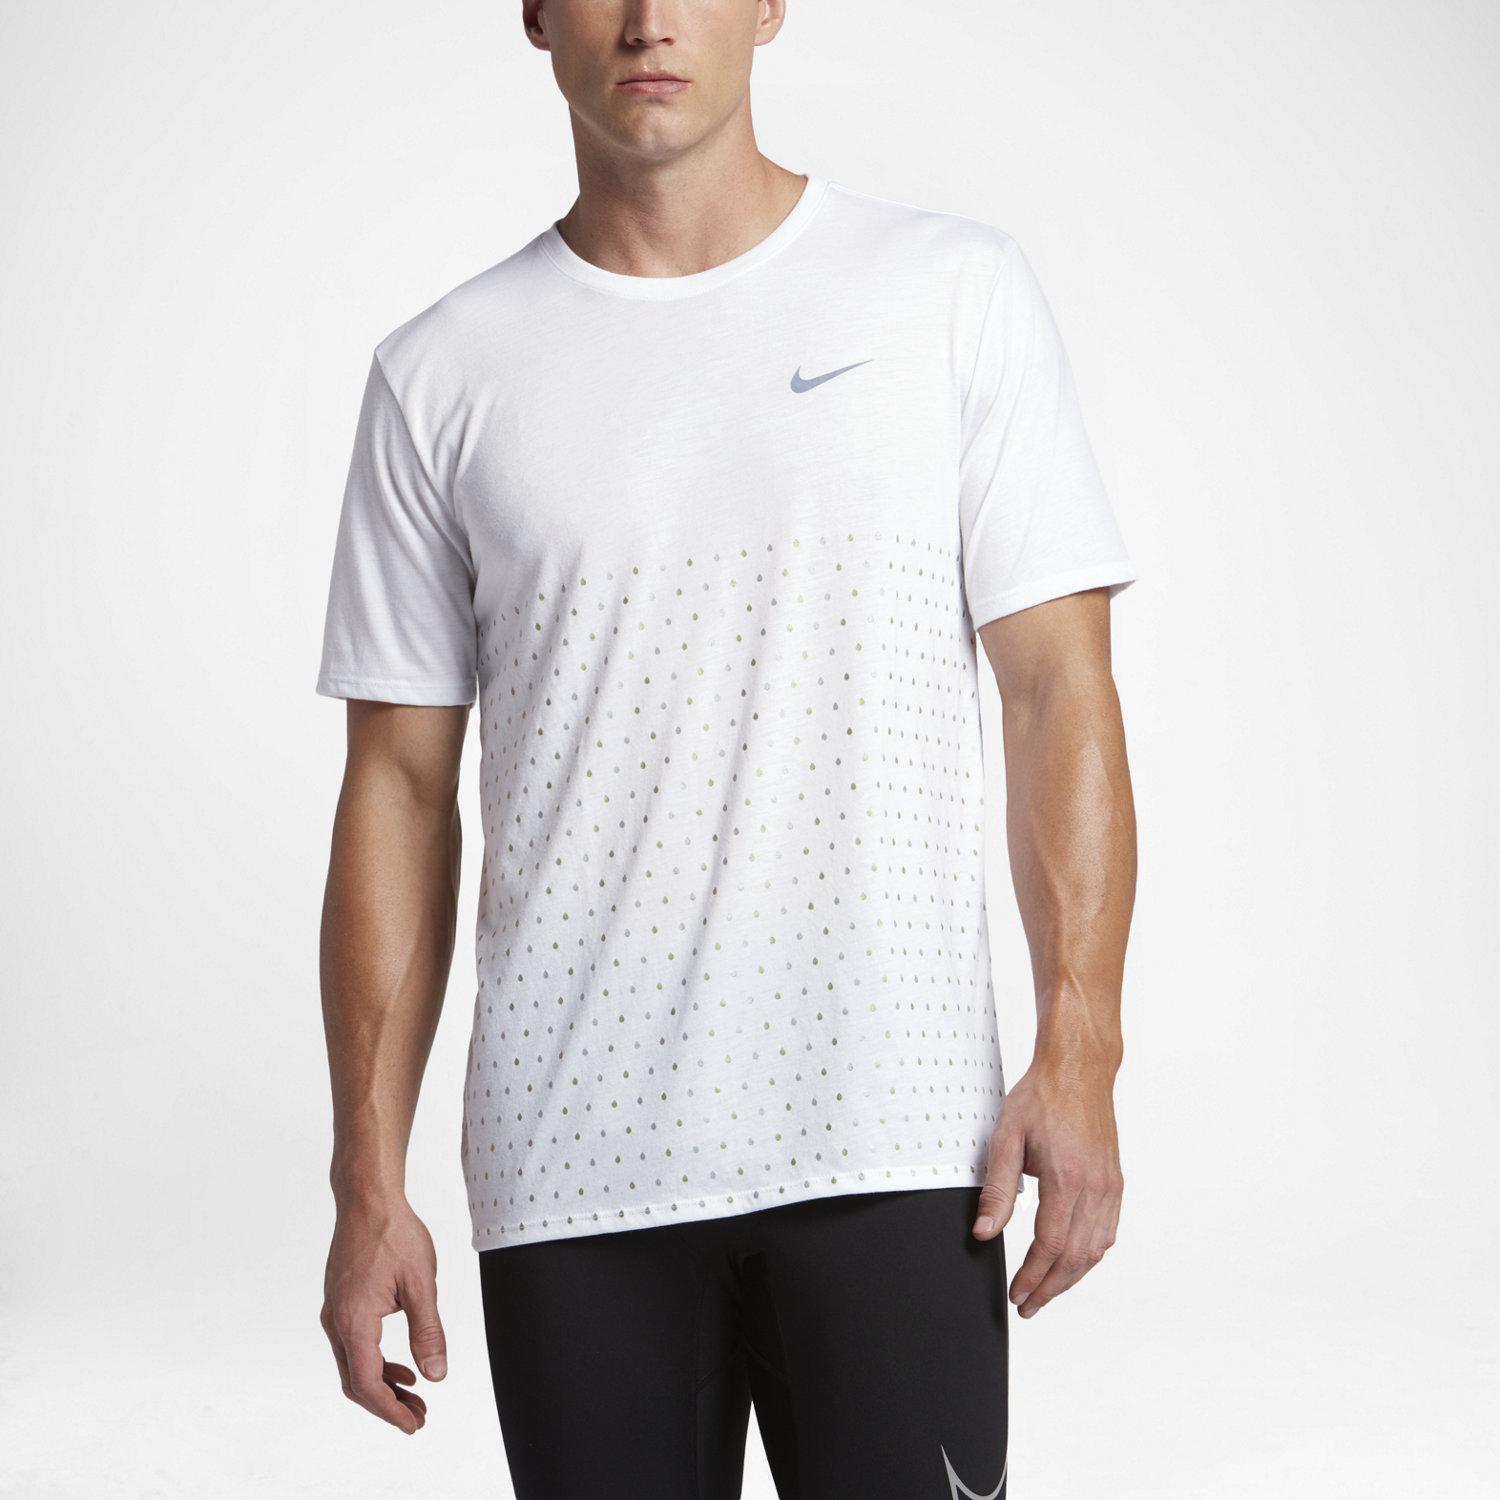 Nike - Men's Running T-Shirt